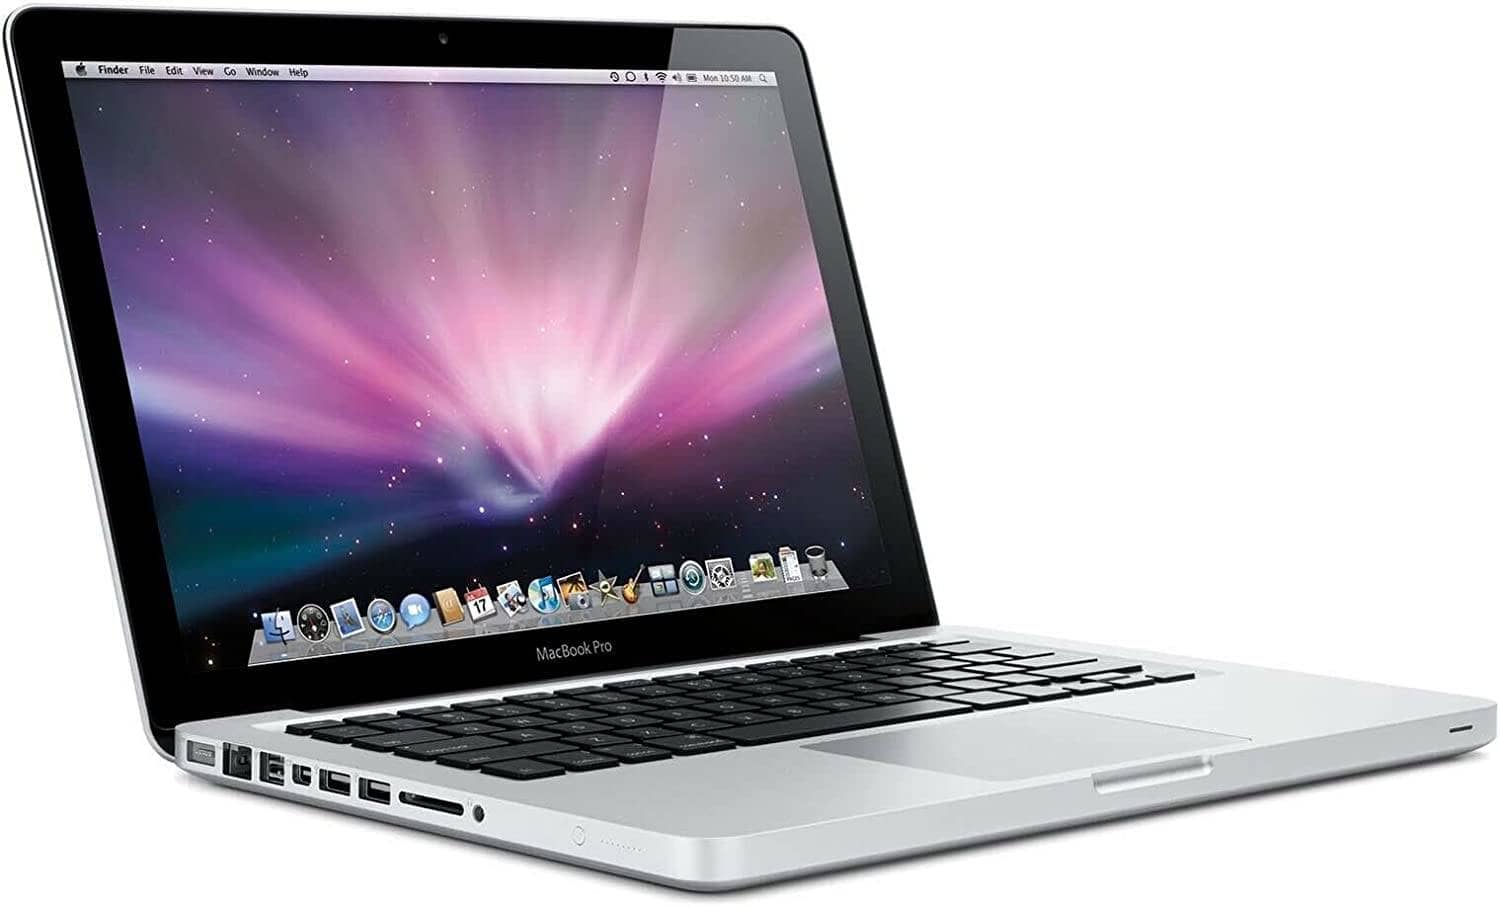 Apple Macbook Pro A1278 13.3” Display Laptop, Intel Core i5 2.5 GHz Processor, 8GB RAM (Pre-owned)